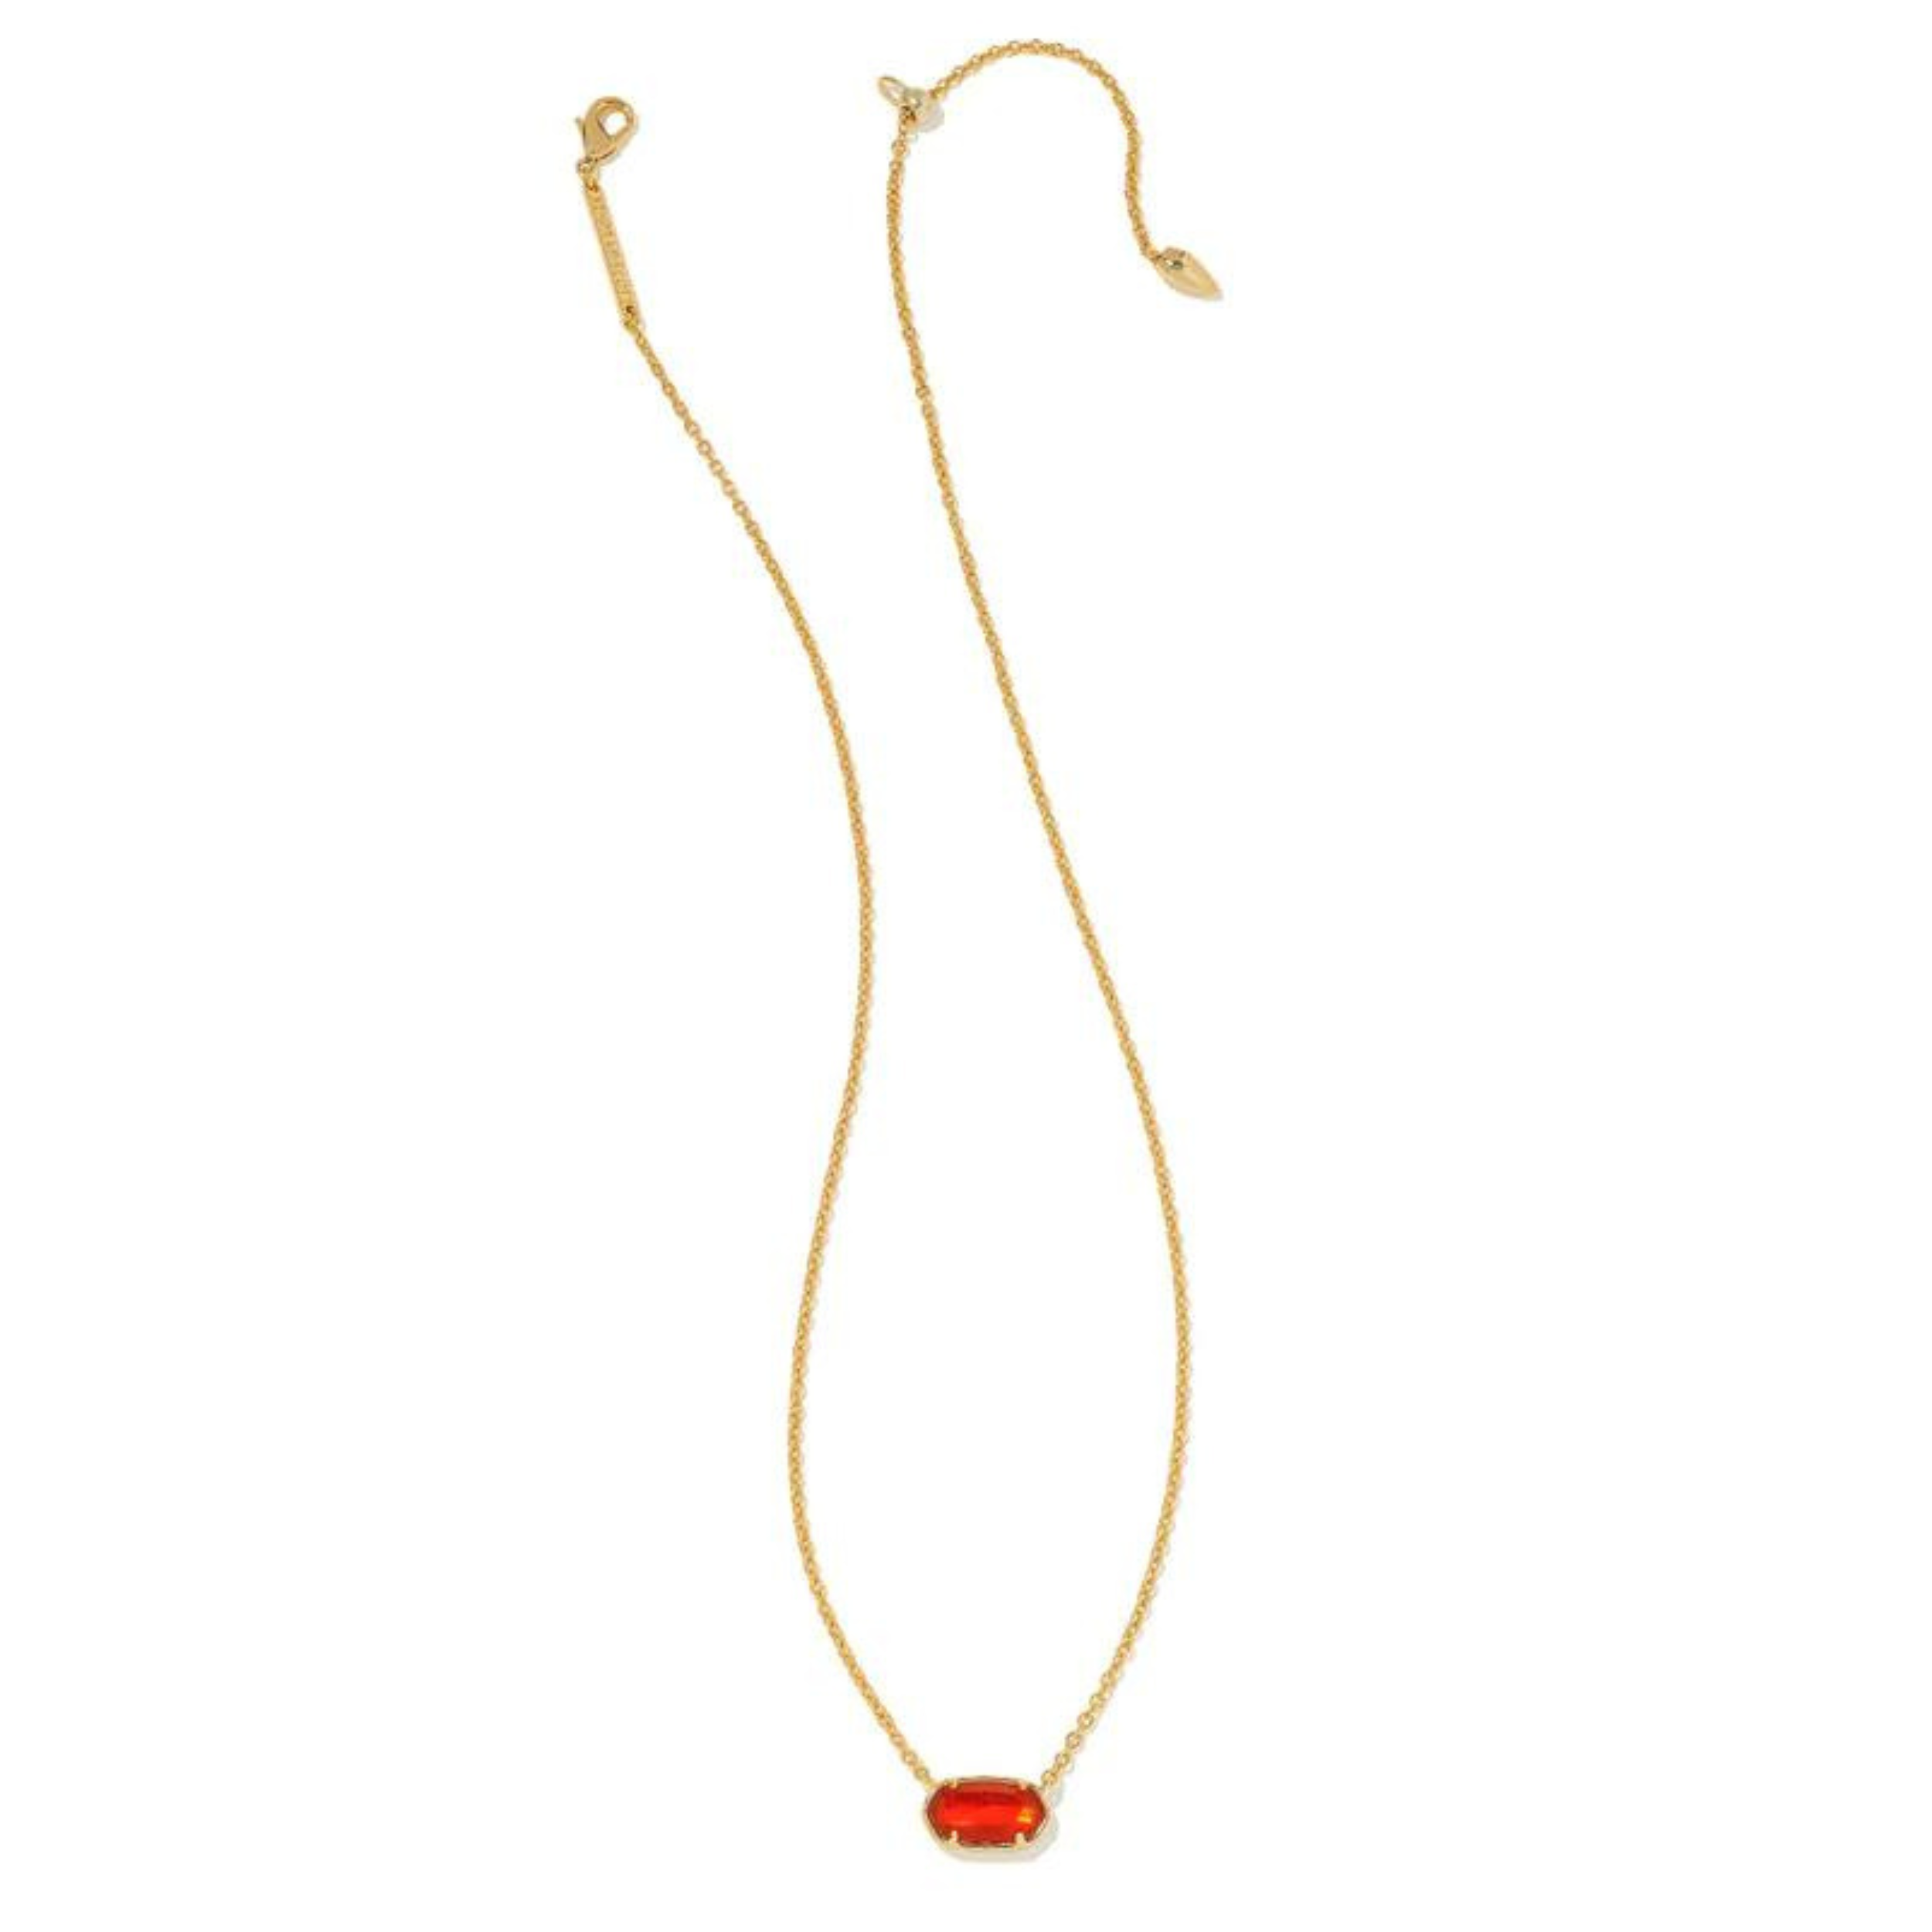 Kendra Scott | Grayson Gold Pendant Necklace in Red Illusion